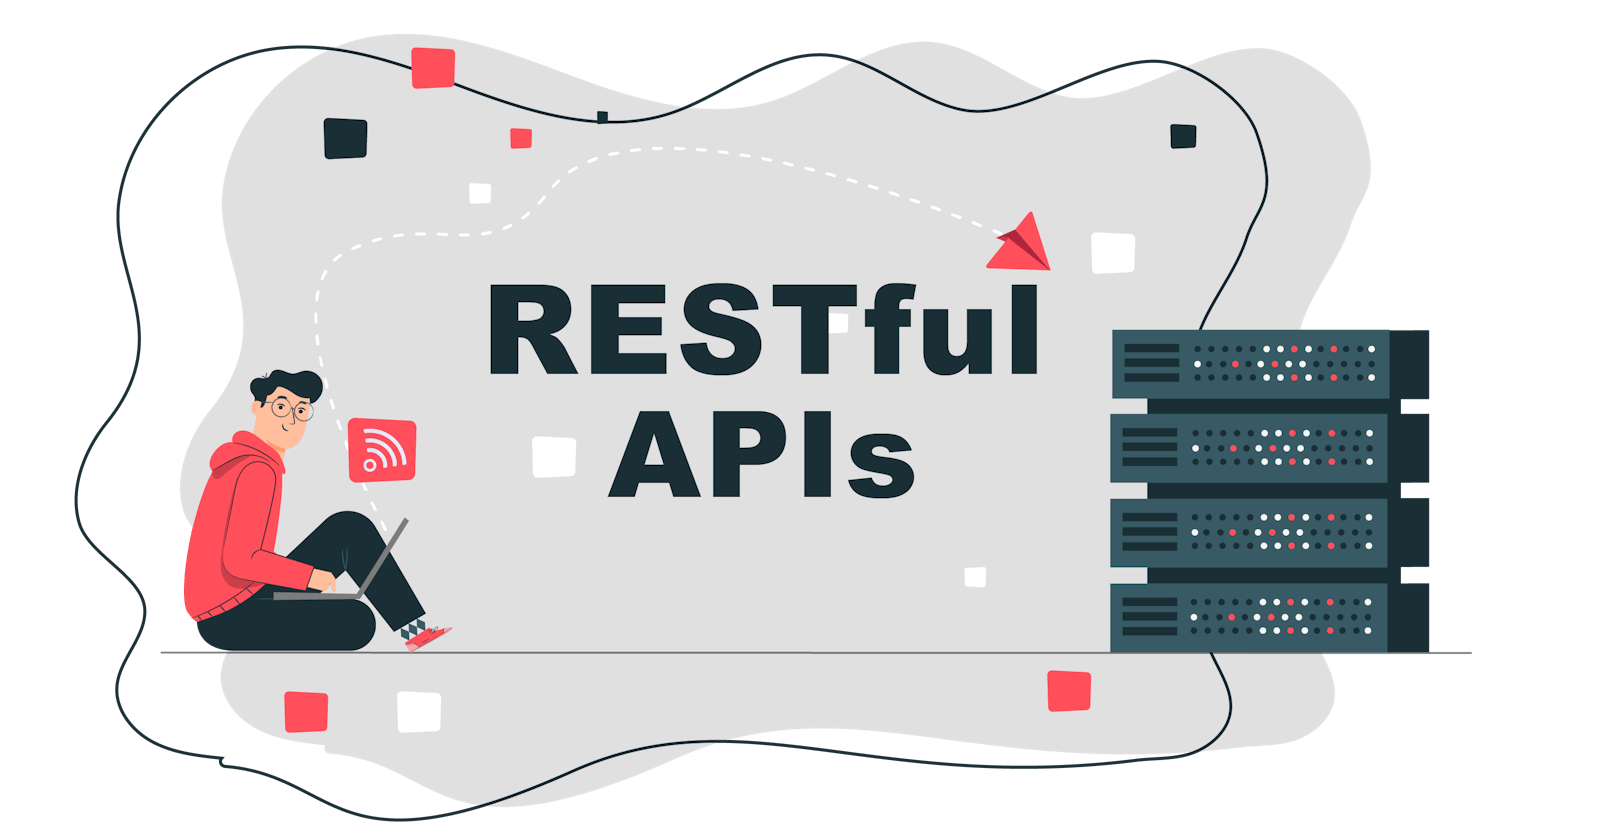 RESTful APIs in 4 minutes